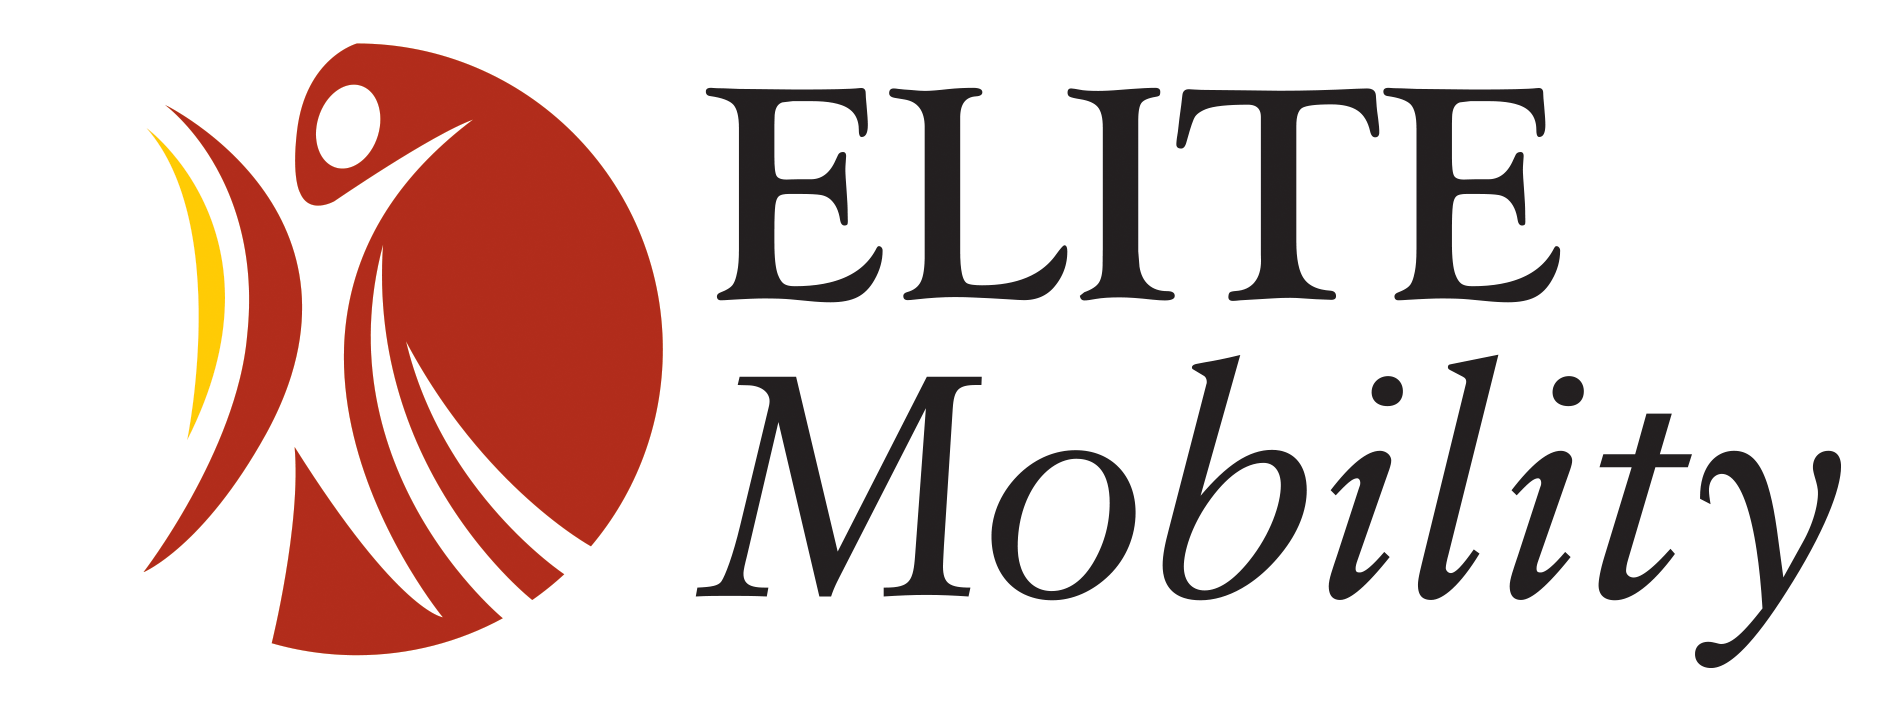 A M Mobility Logo - elite-mobility-logo-double-line - Bristol International Balloon ...